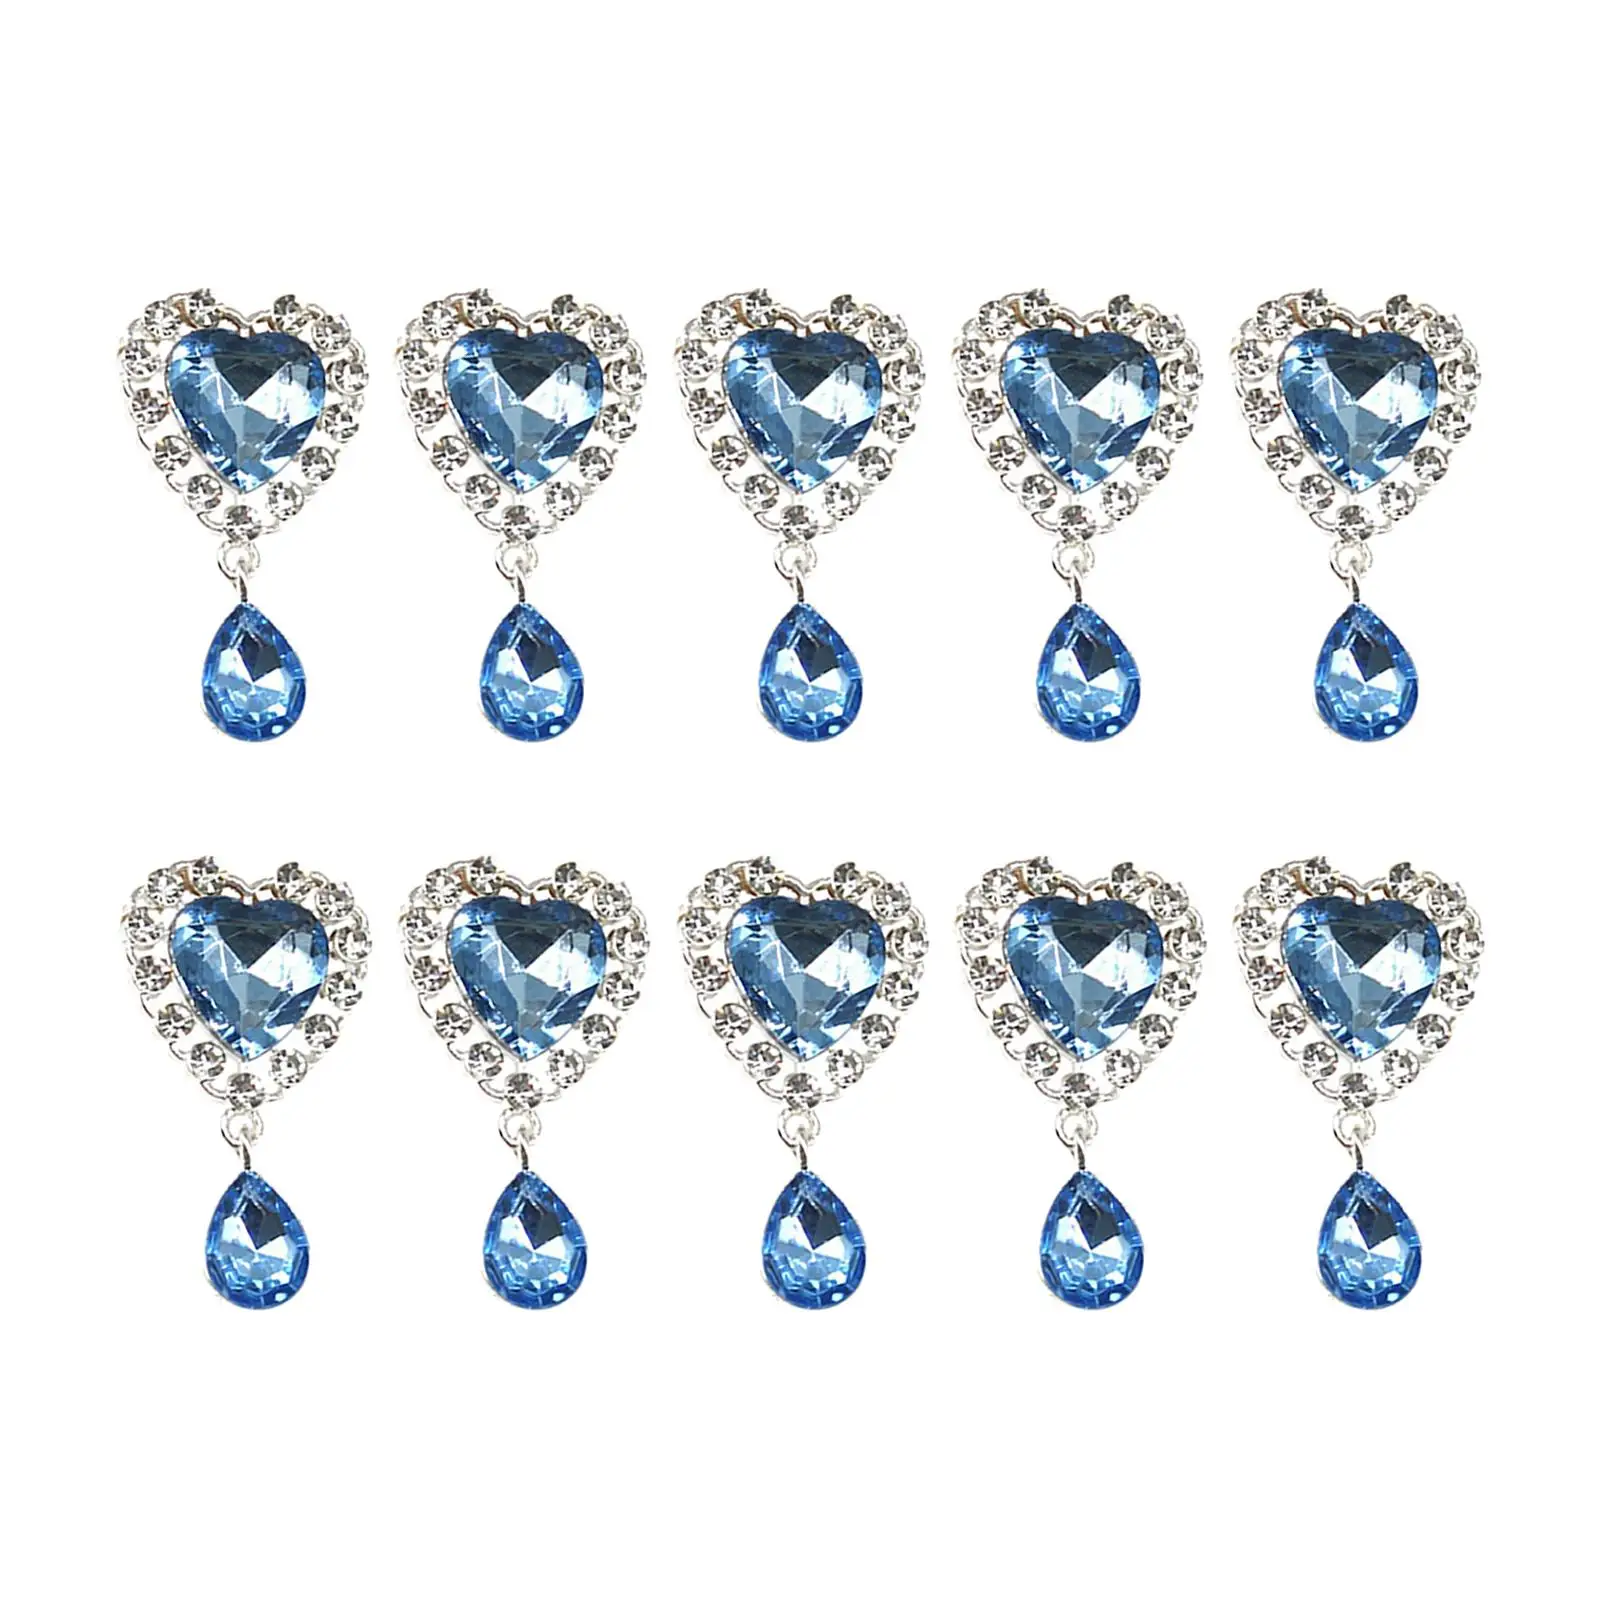 10Pcs Heart Rhinestone Buttons 45mmx25mm Metal Rhinestones Embellishments for DIY Wedding Bouquet Clothing Jewelry Making